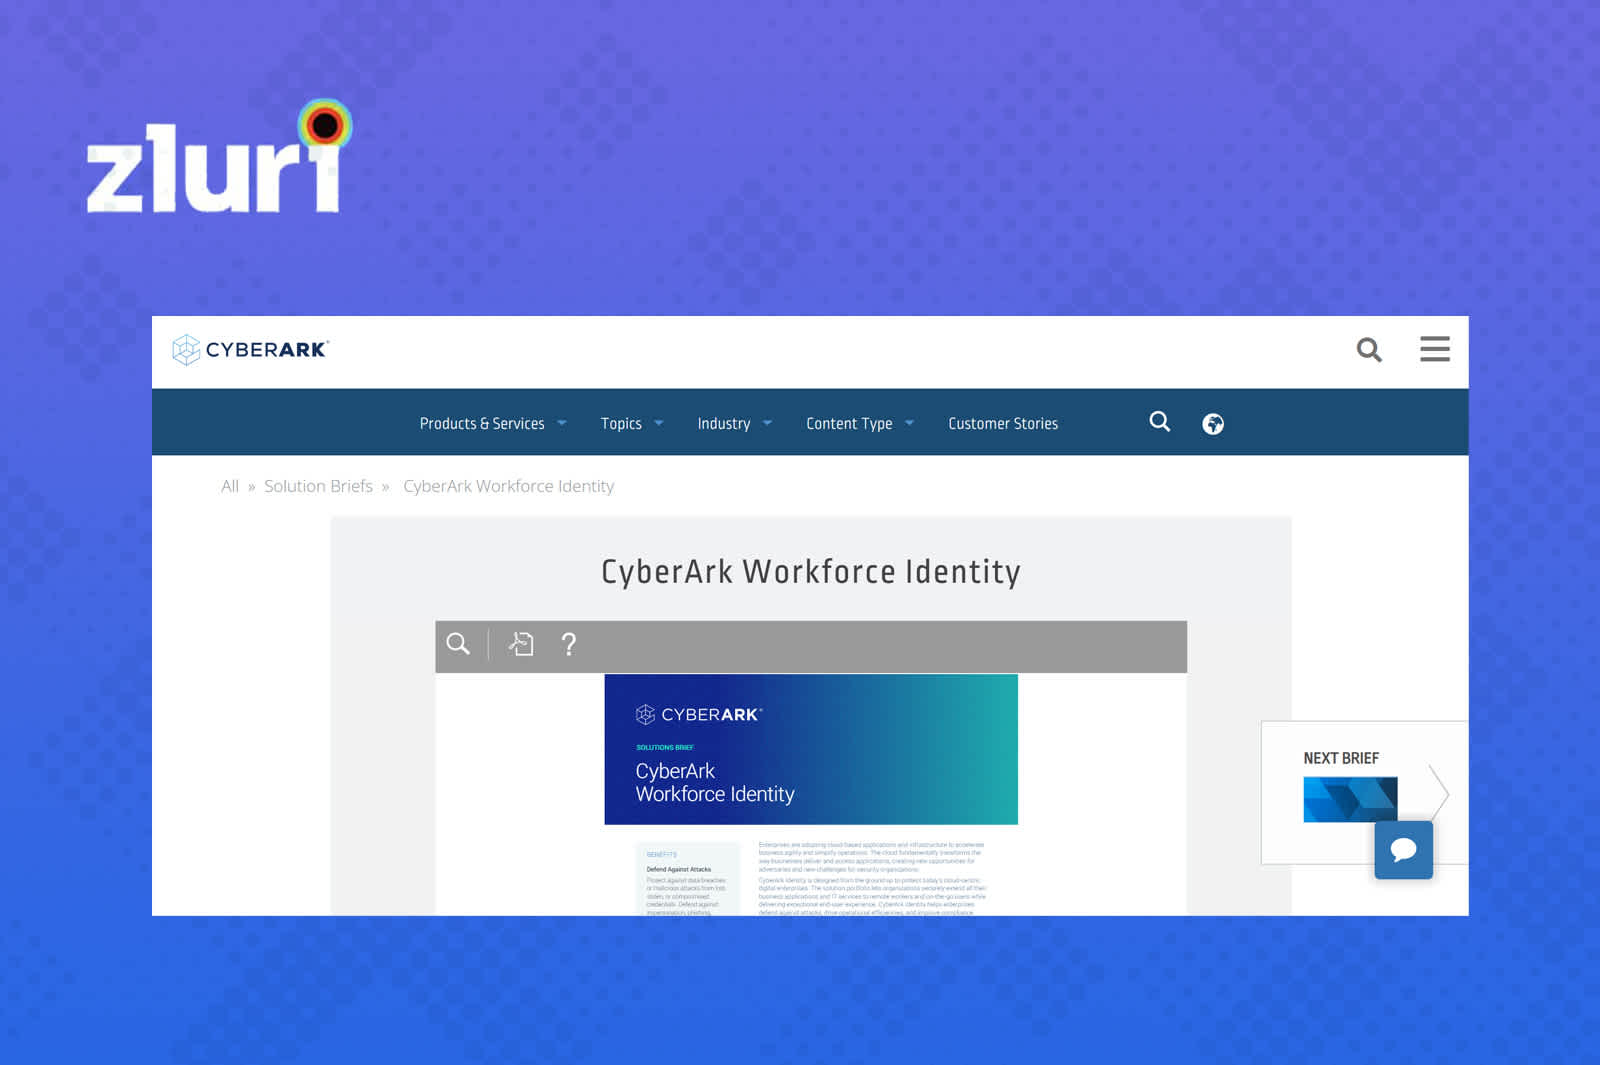 CyberArk Workforce Identity